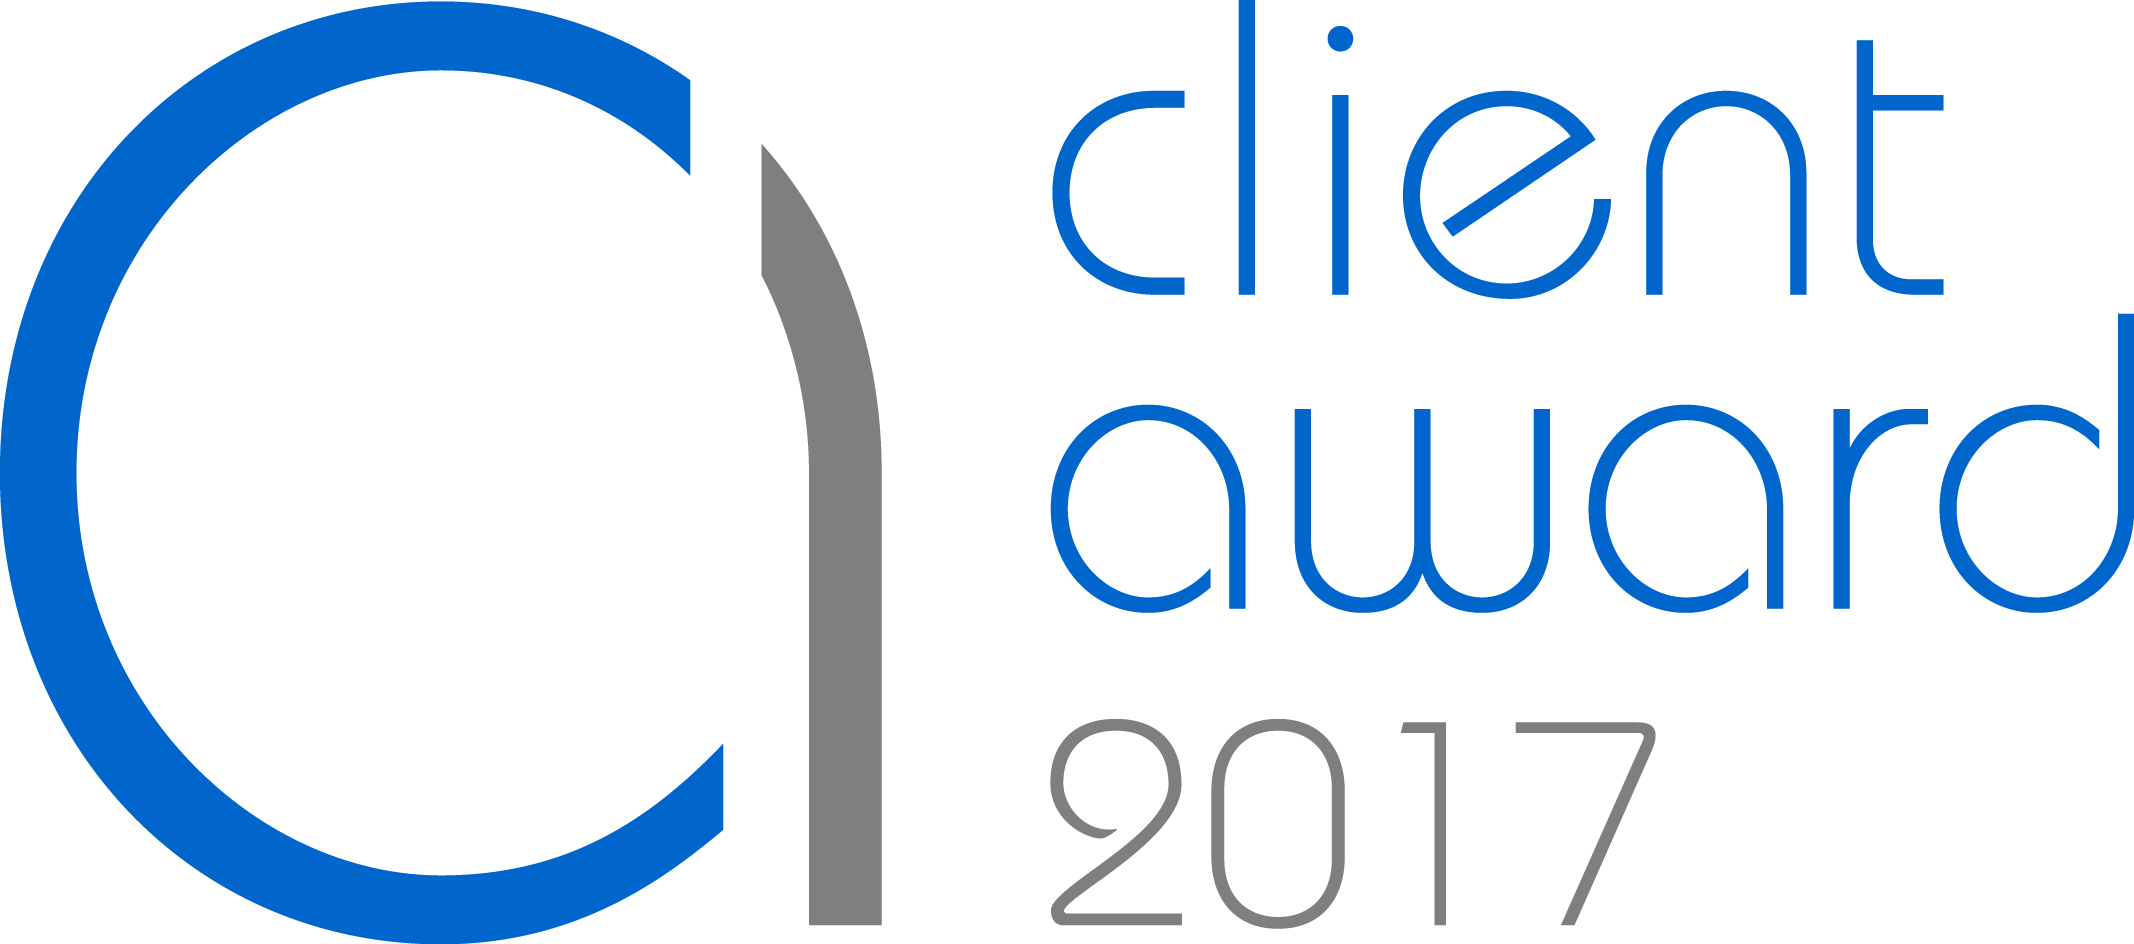 Client award logo 4c 2017